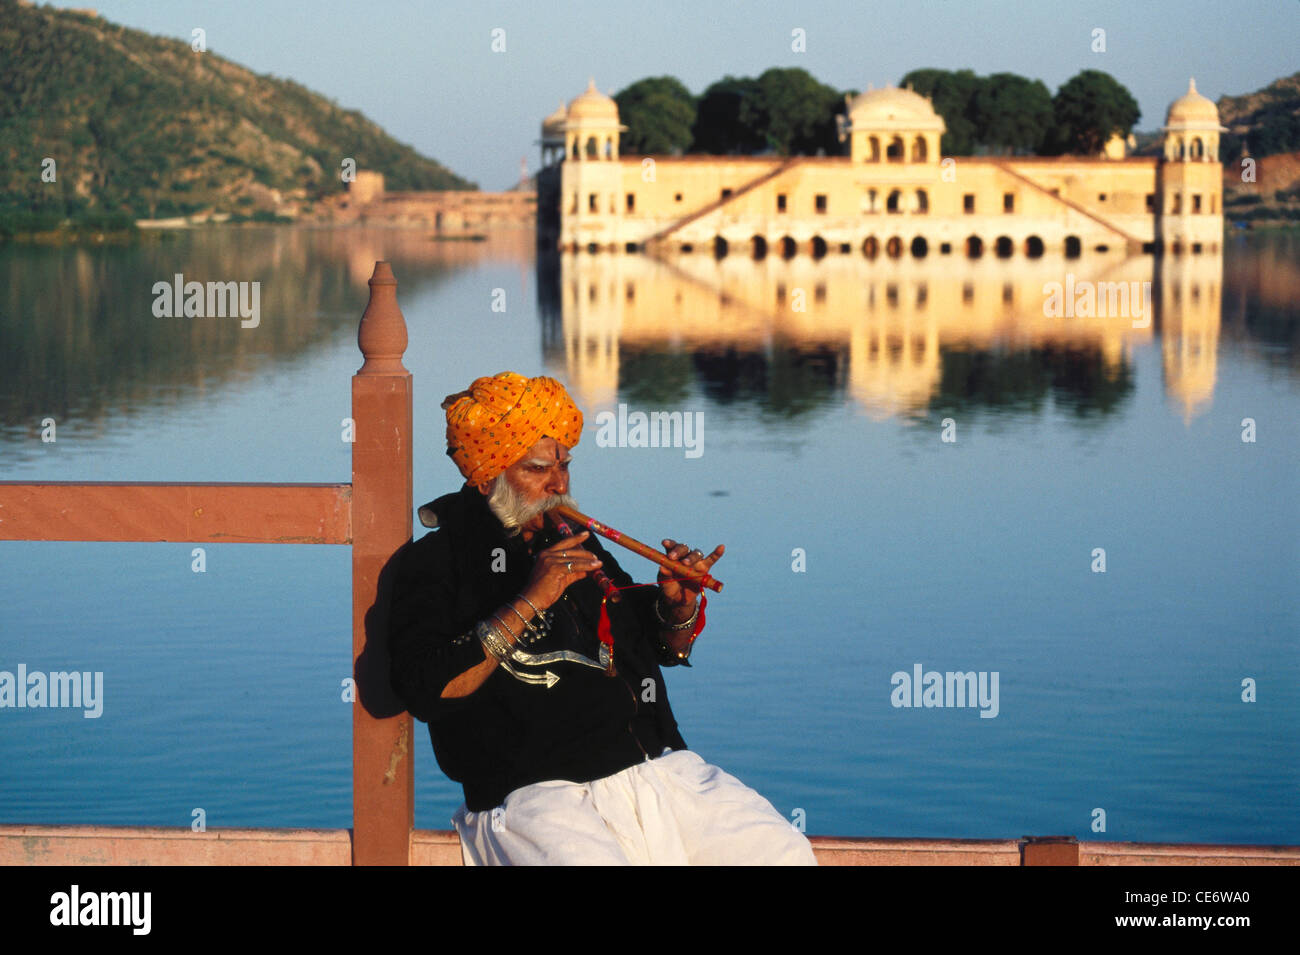 indiano rajasthani uomo musicista folk che suona fiato strumento musicale flauto jaipur rajasthan india MR#657 Foto Stock